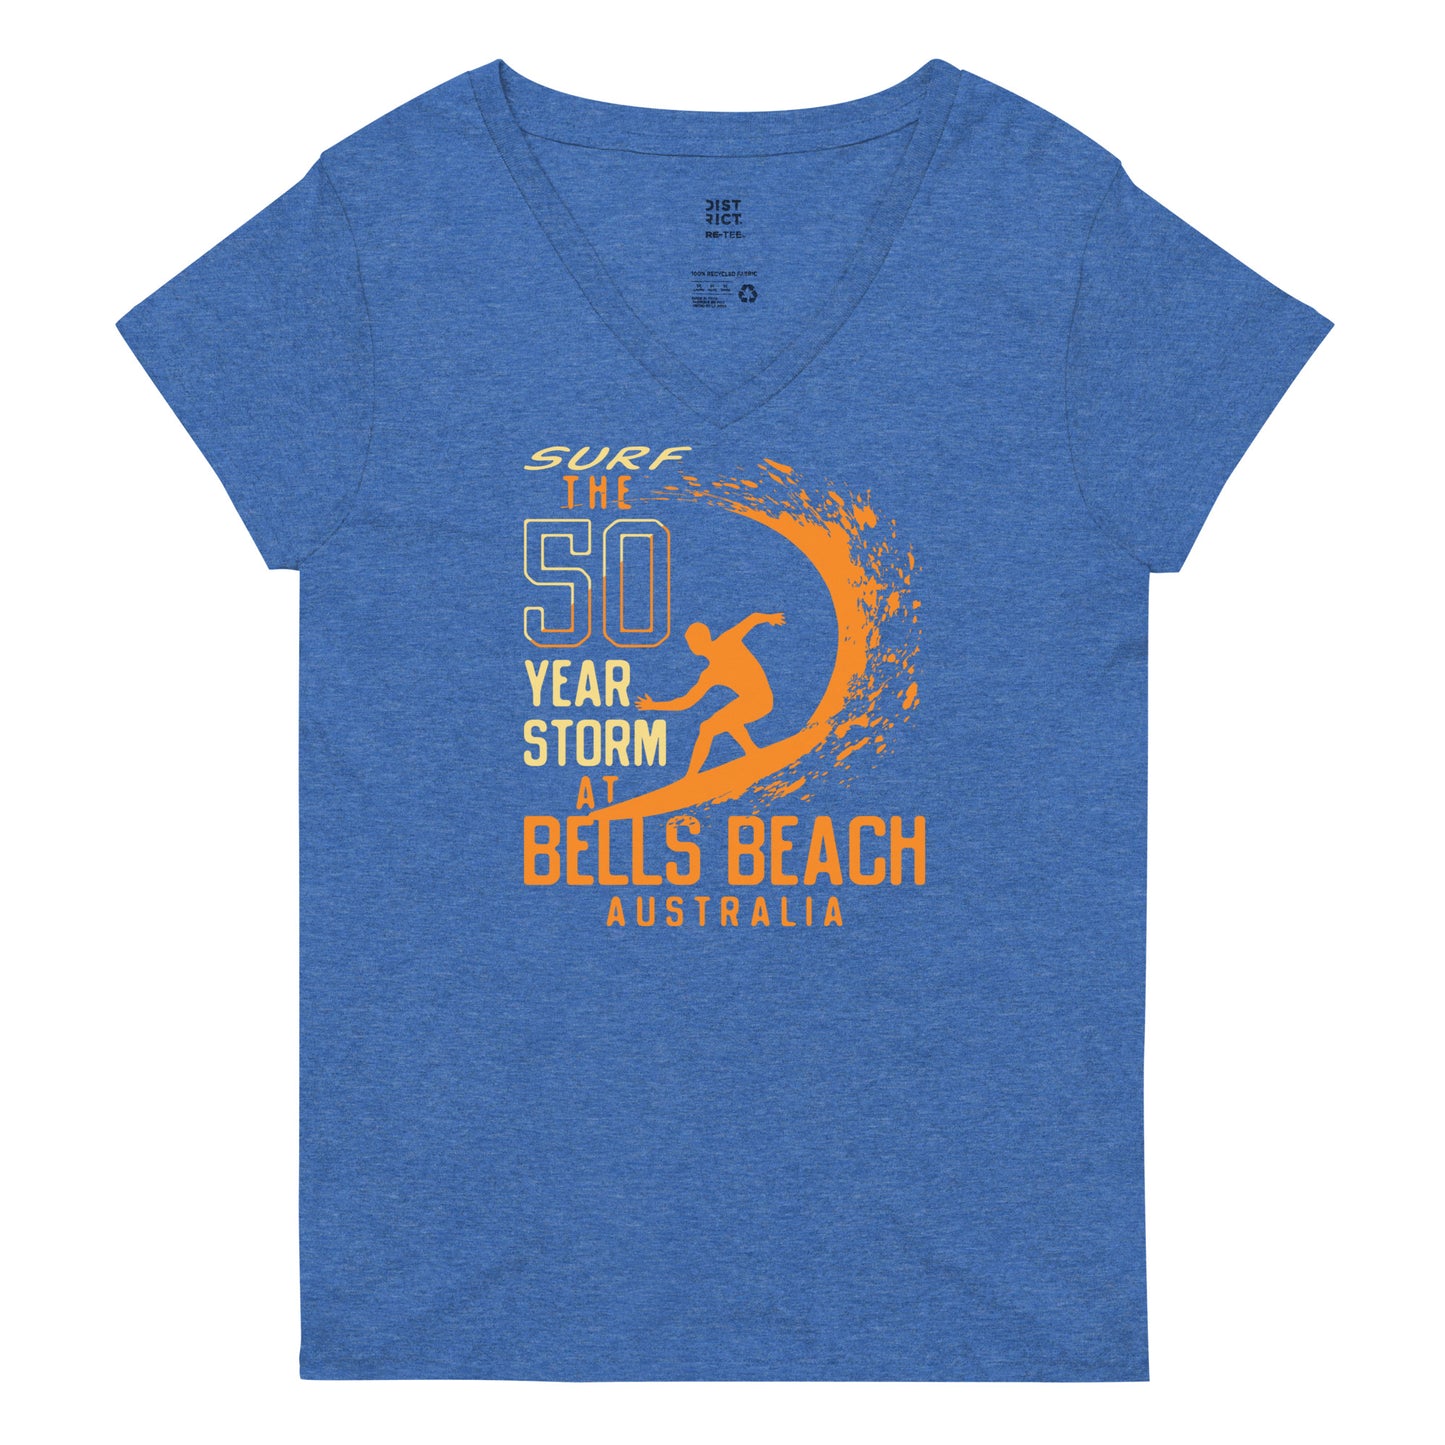 50 Year Storm At Bells Beach Women's V-Neck Tee